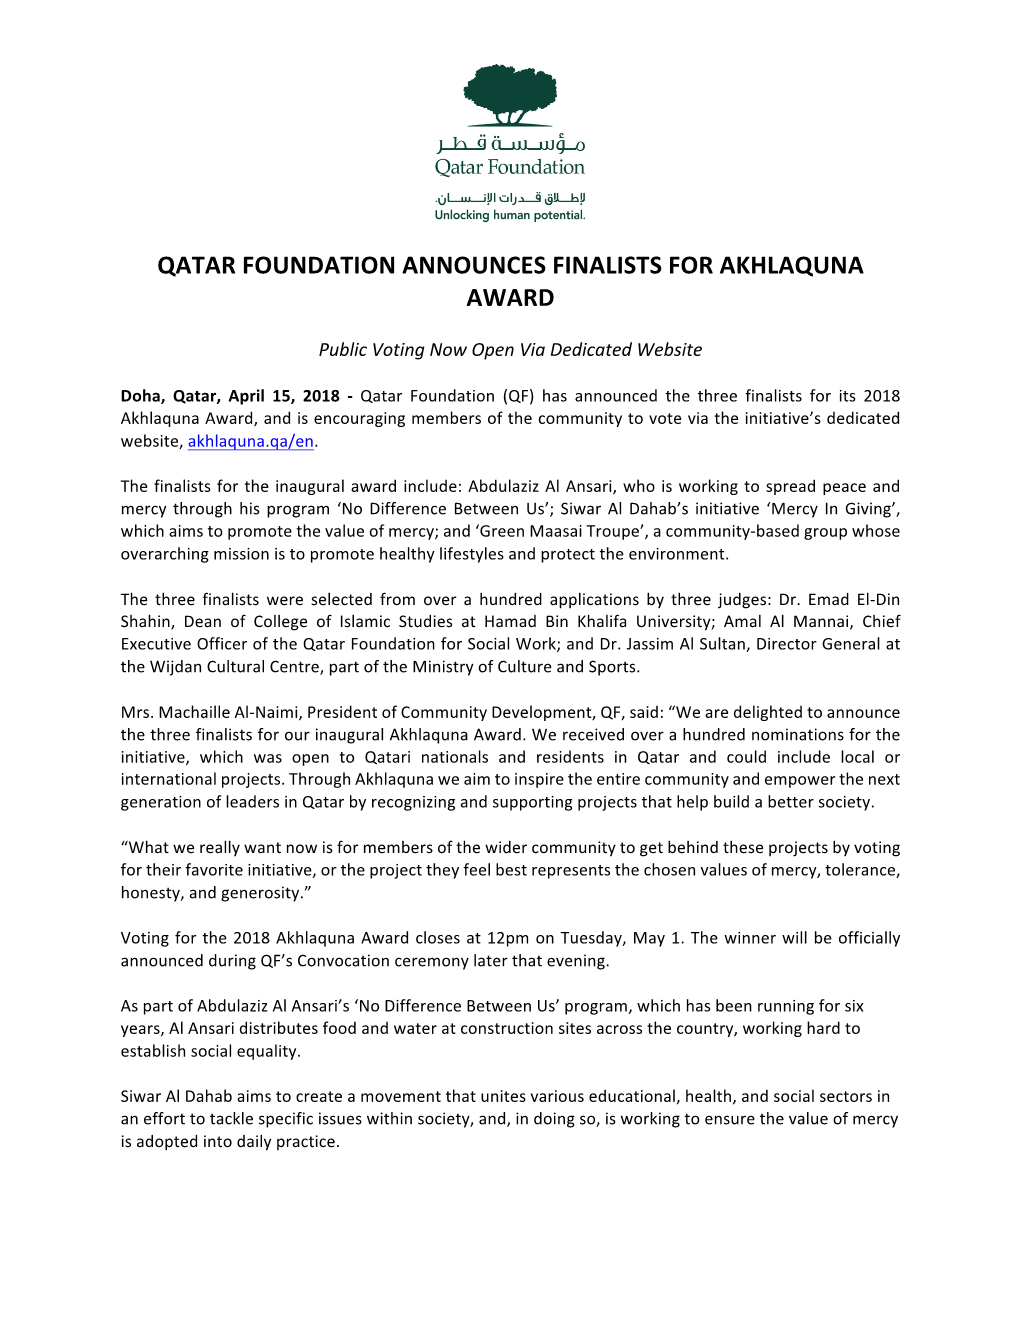 Qatar Foundation Announces Finalists for Akhlaquna Award